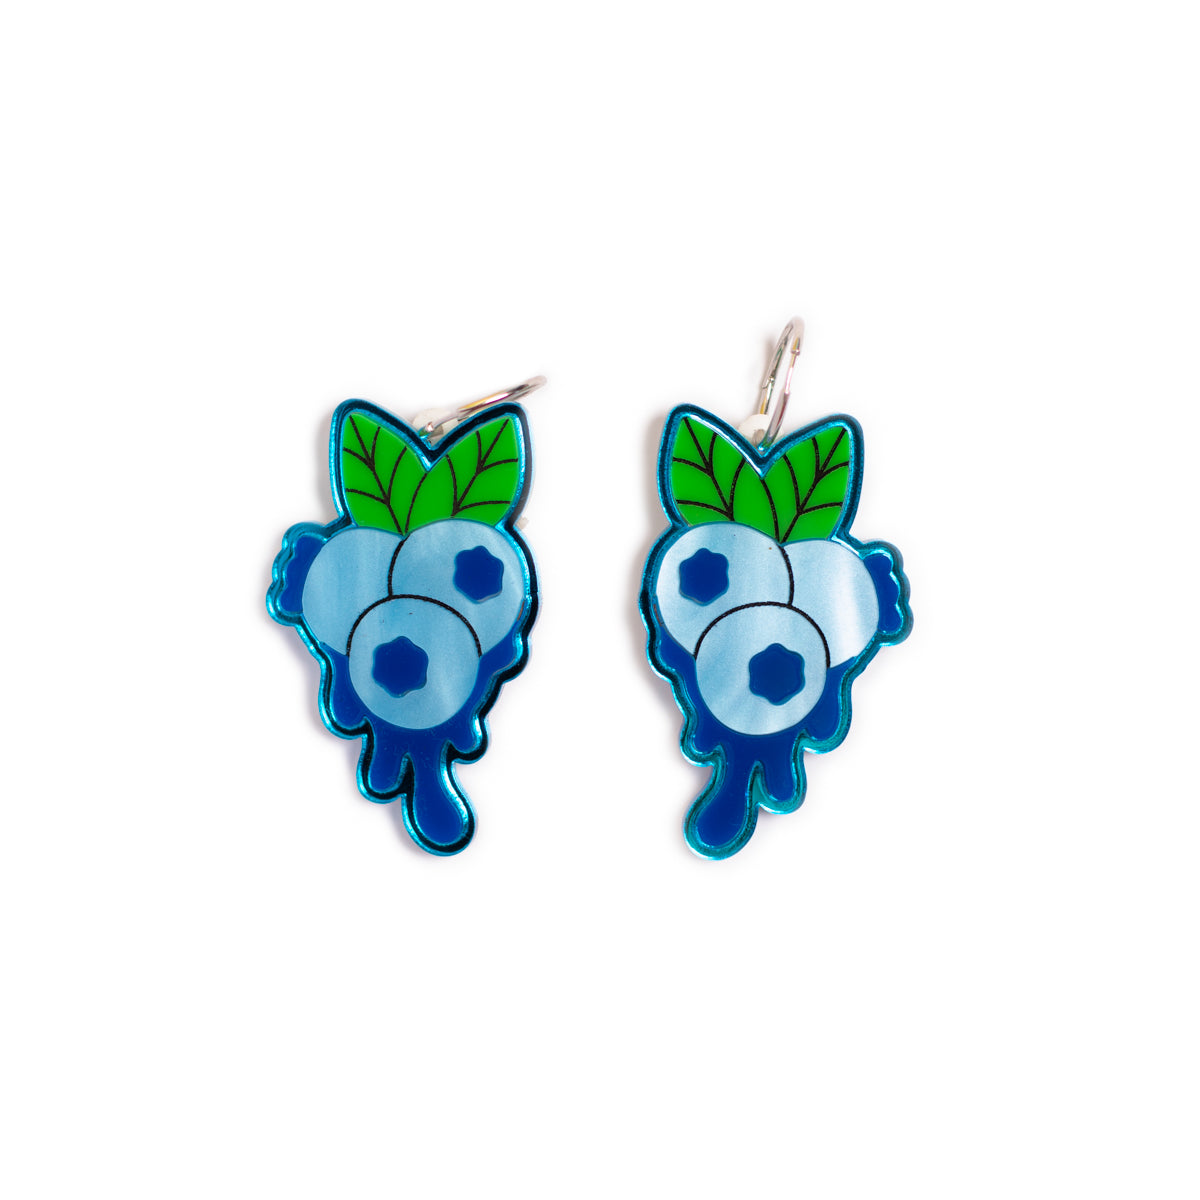 The Blueberry Earrings